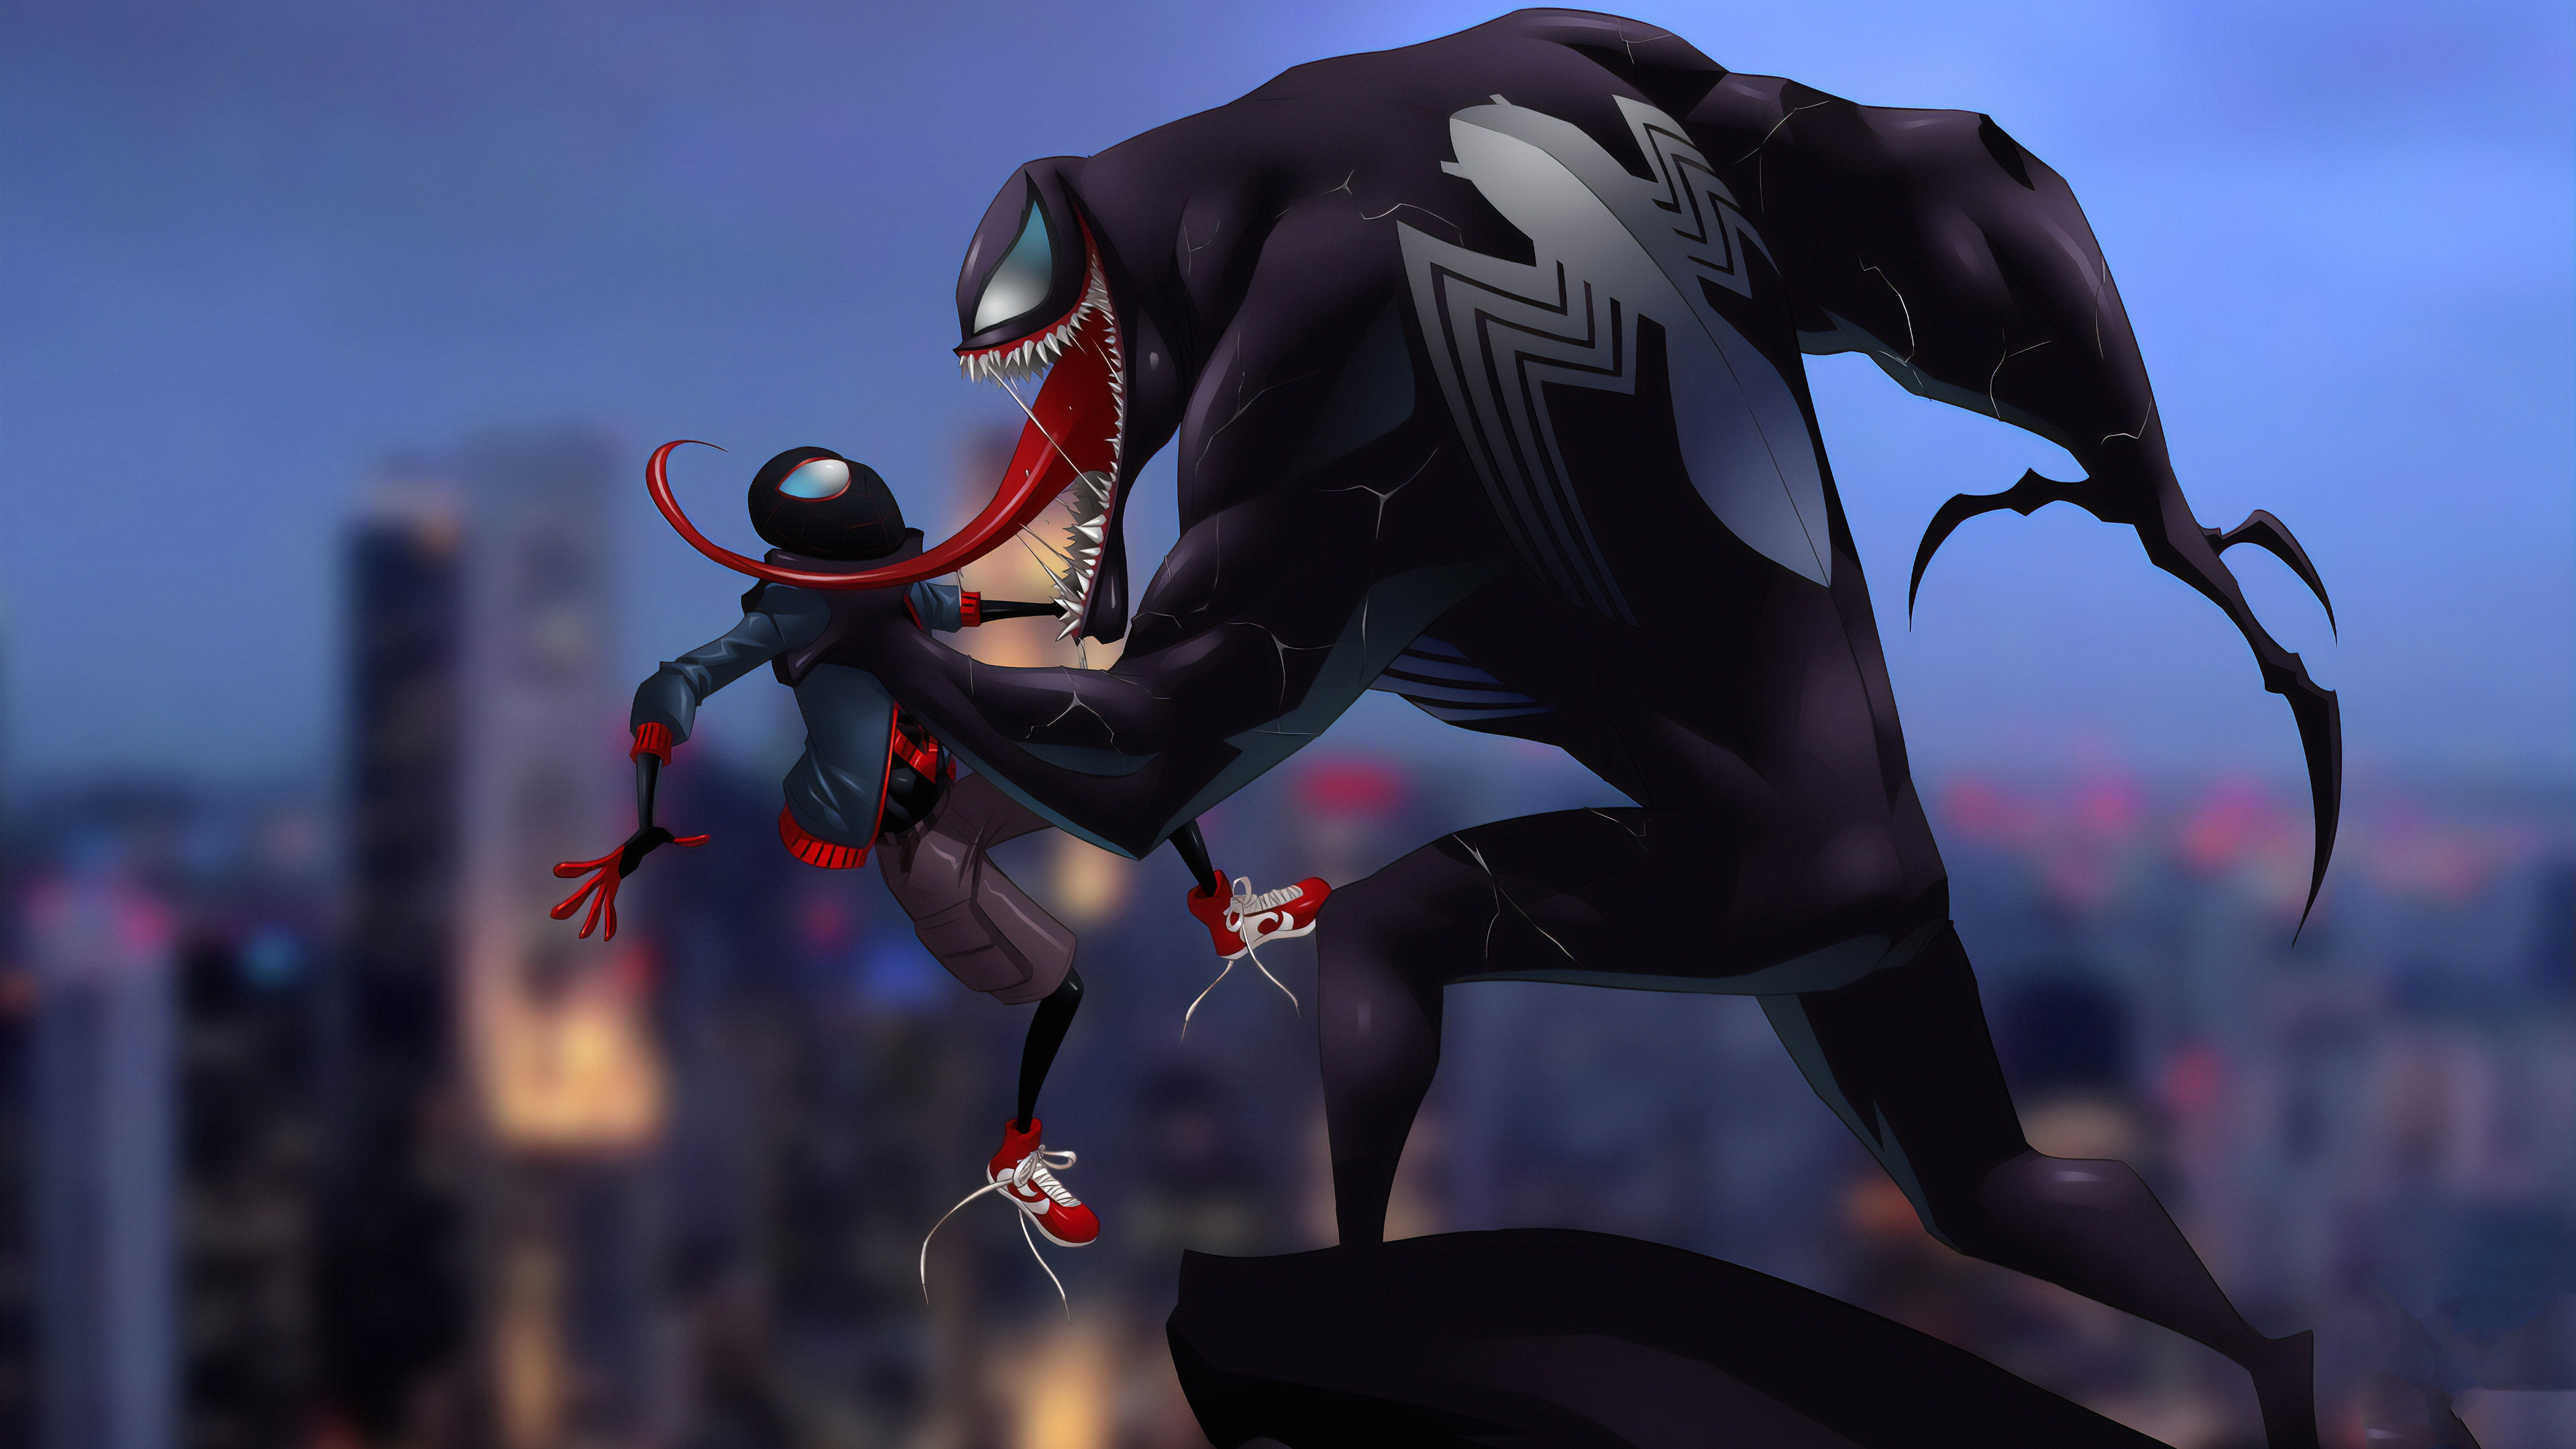 Spider Man New Venom Look 4K wallpaper download